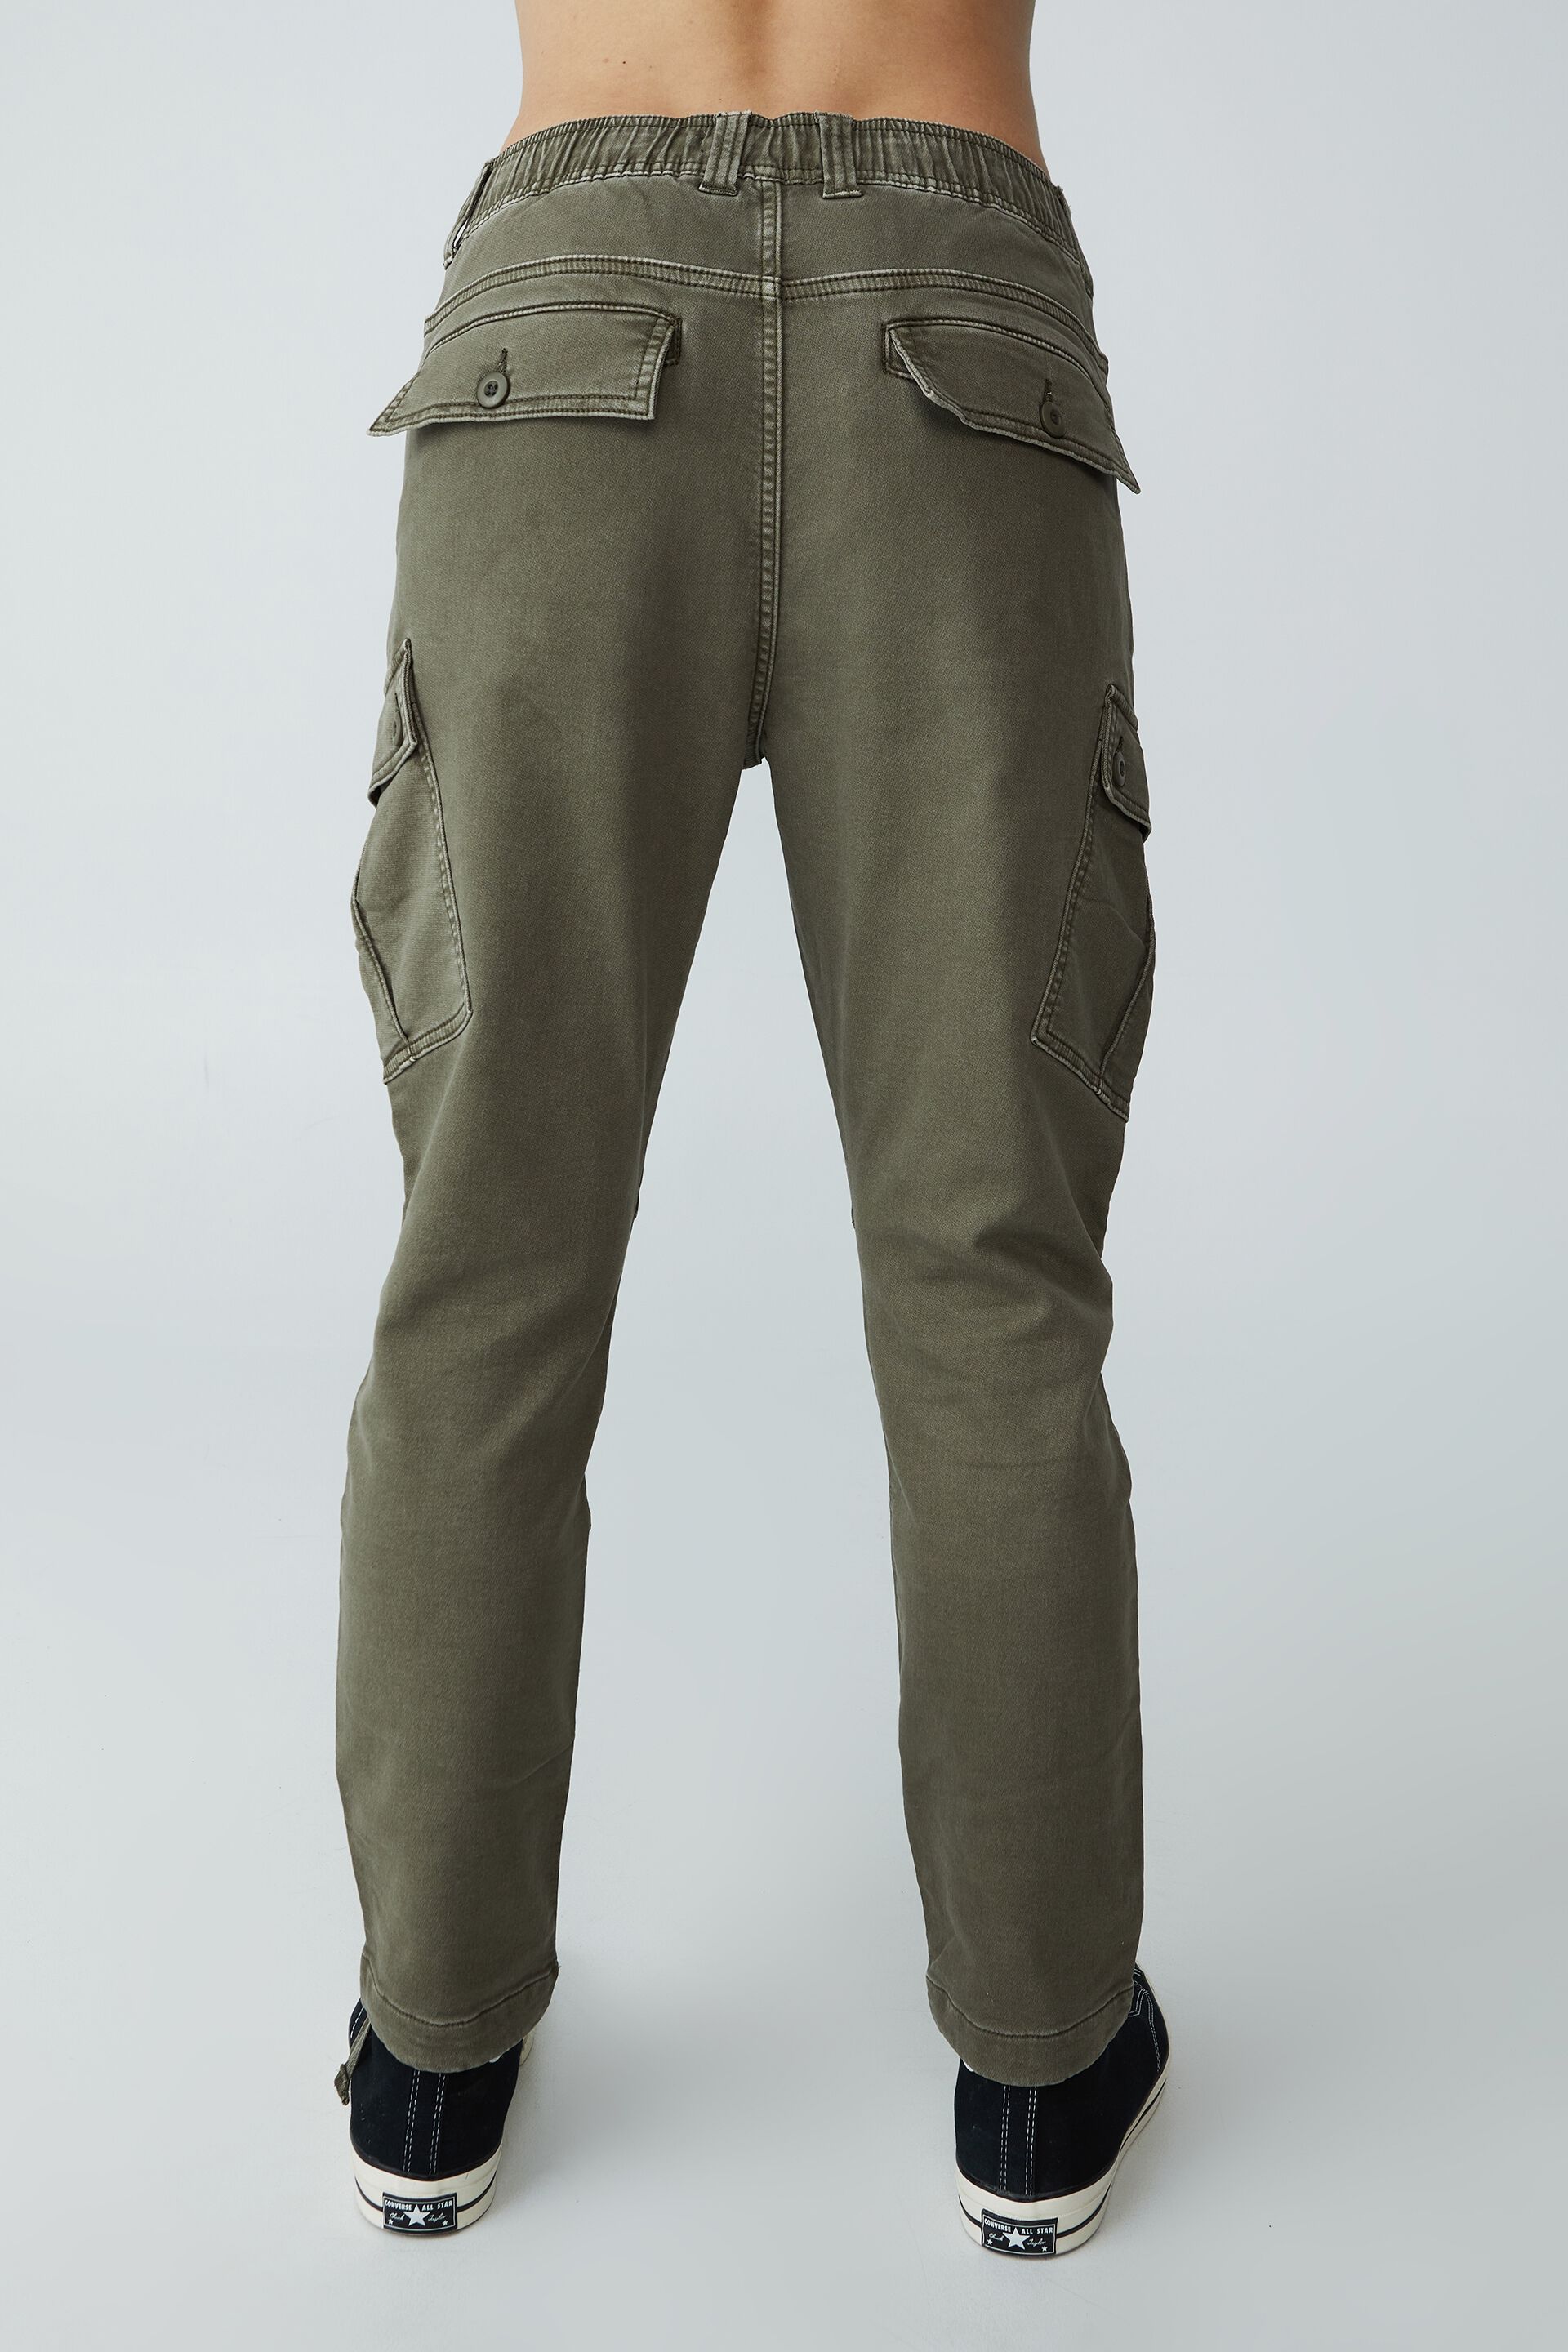 Cotton Cargo Pants Drawstring Elastic Waist Y2k Style Soft Breathable Daily  Wear | eBay